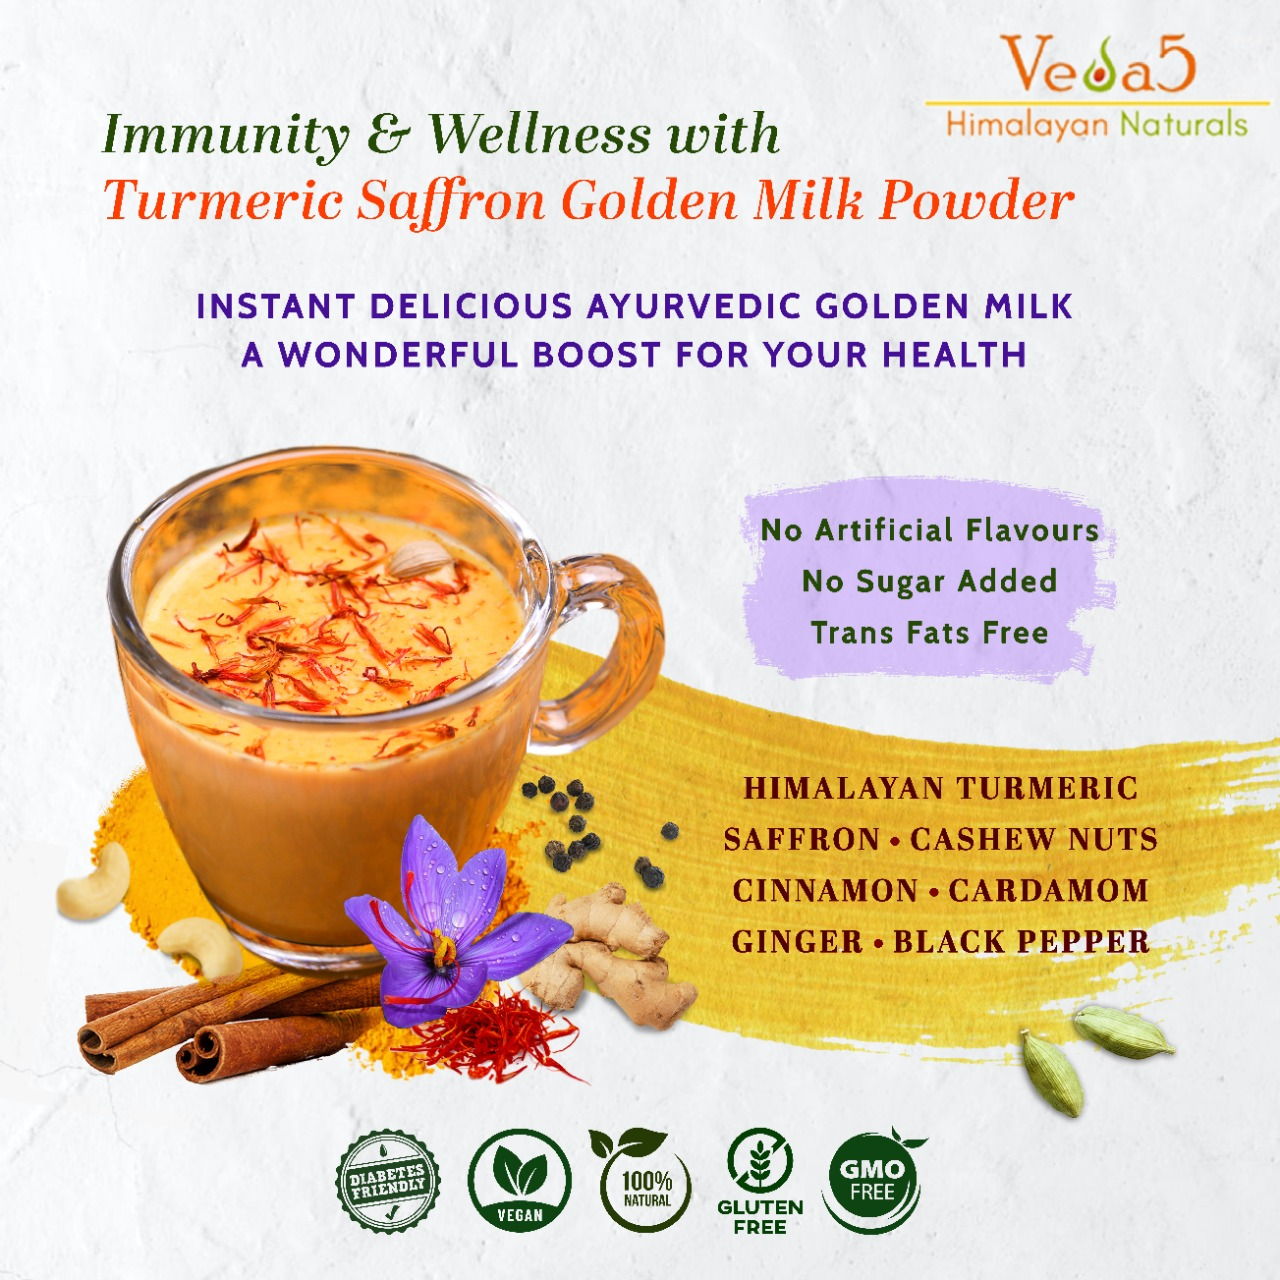 Turmeric Saffron Golden Milk Powder Ingredients Veda5 Himalayan Naturals